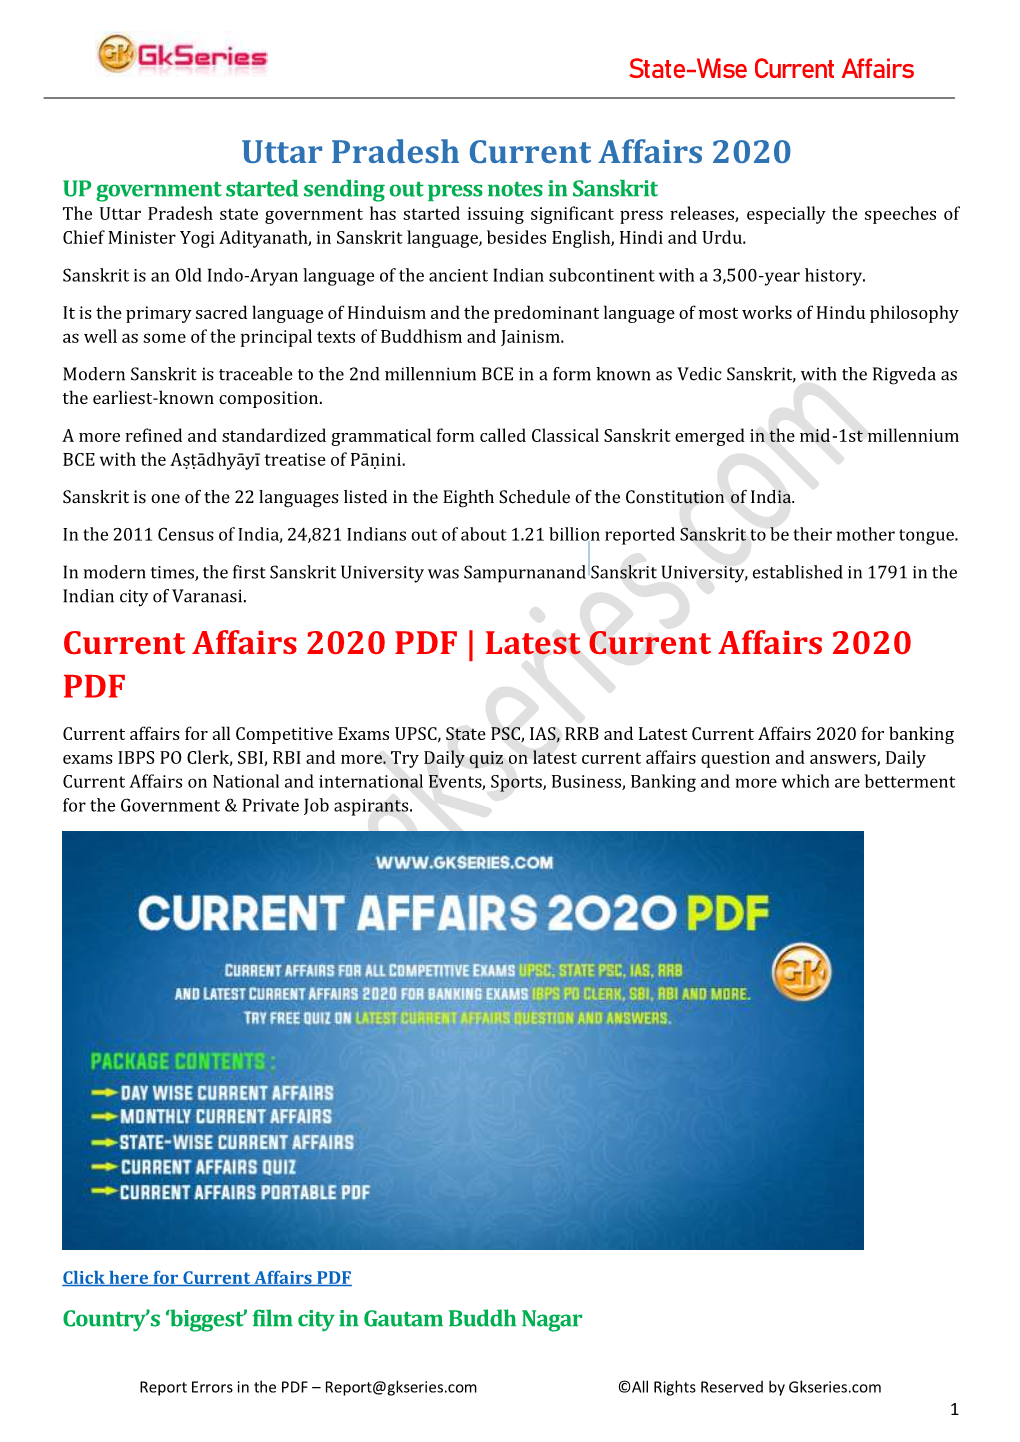 Latest Current Affairs 2020 PDF